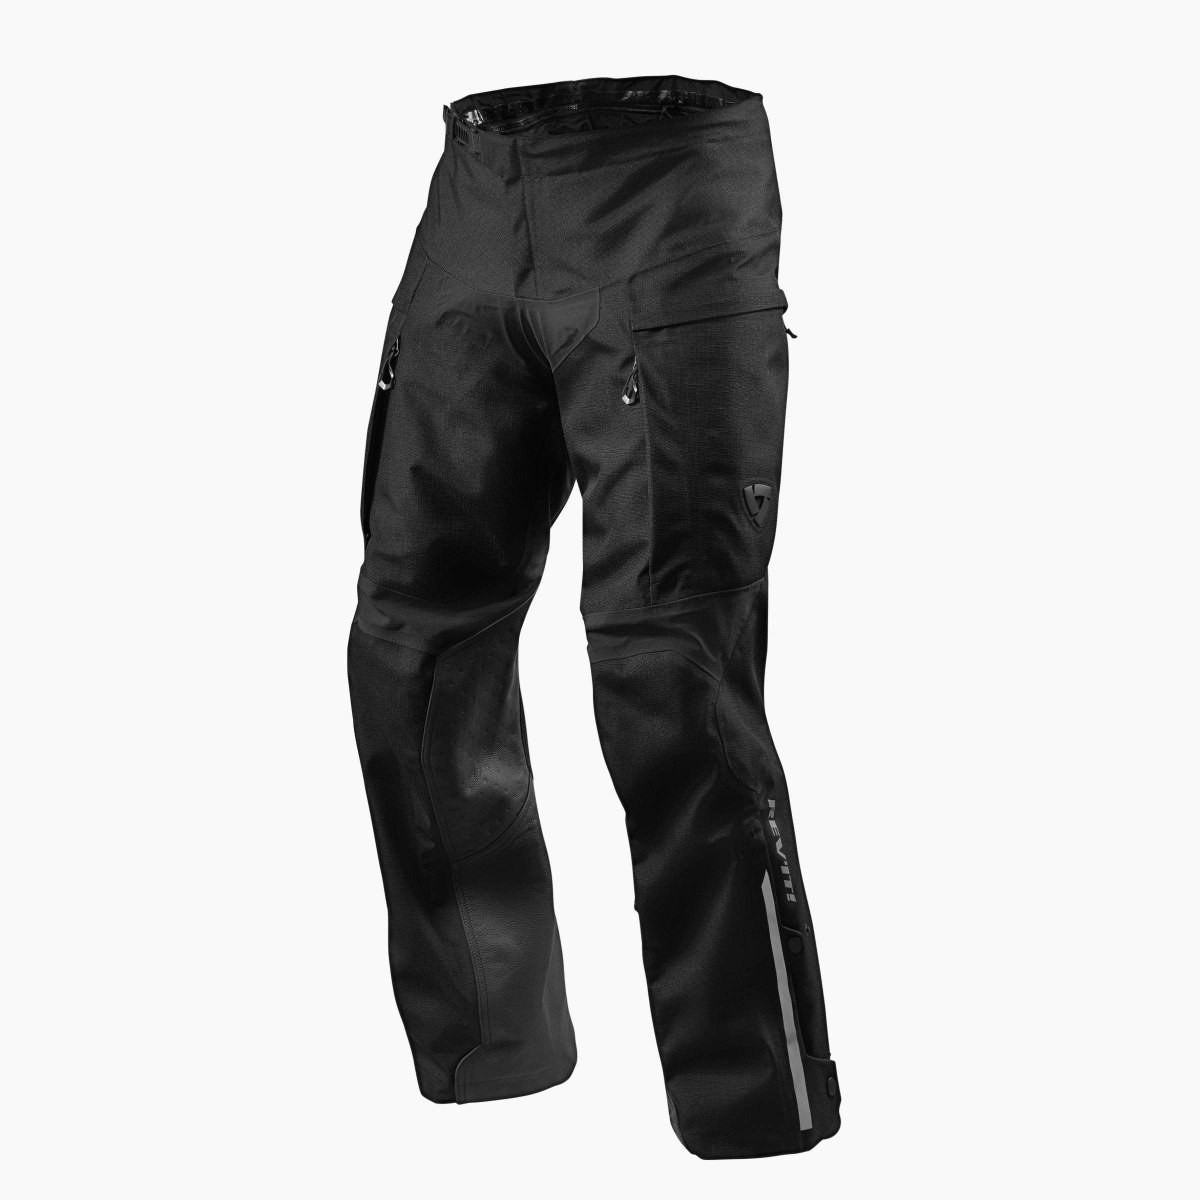 Image of REV'IT! Component H2O Standard Black Motorcycle Pants Size XL EN